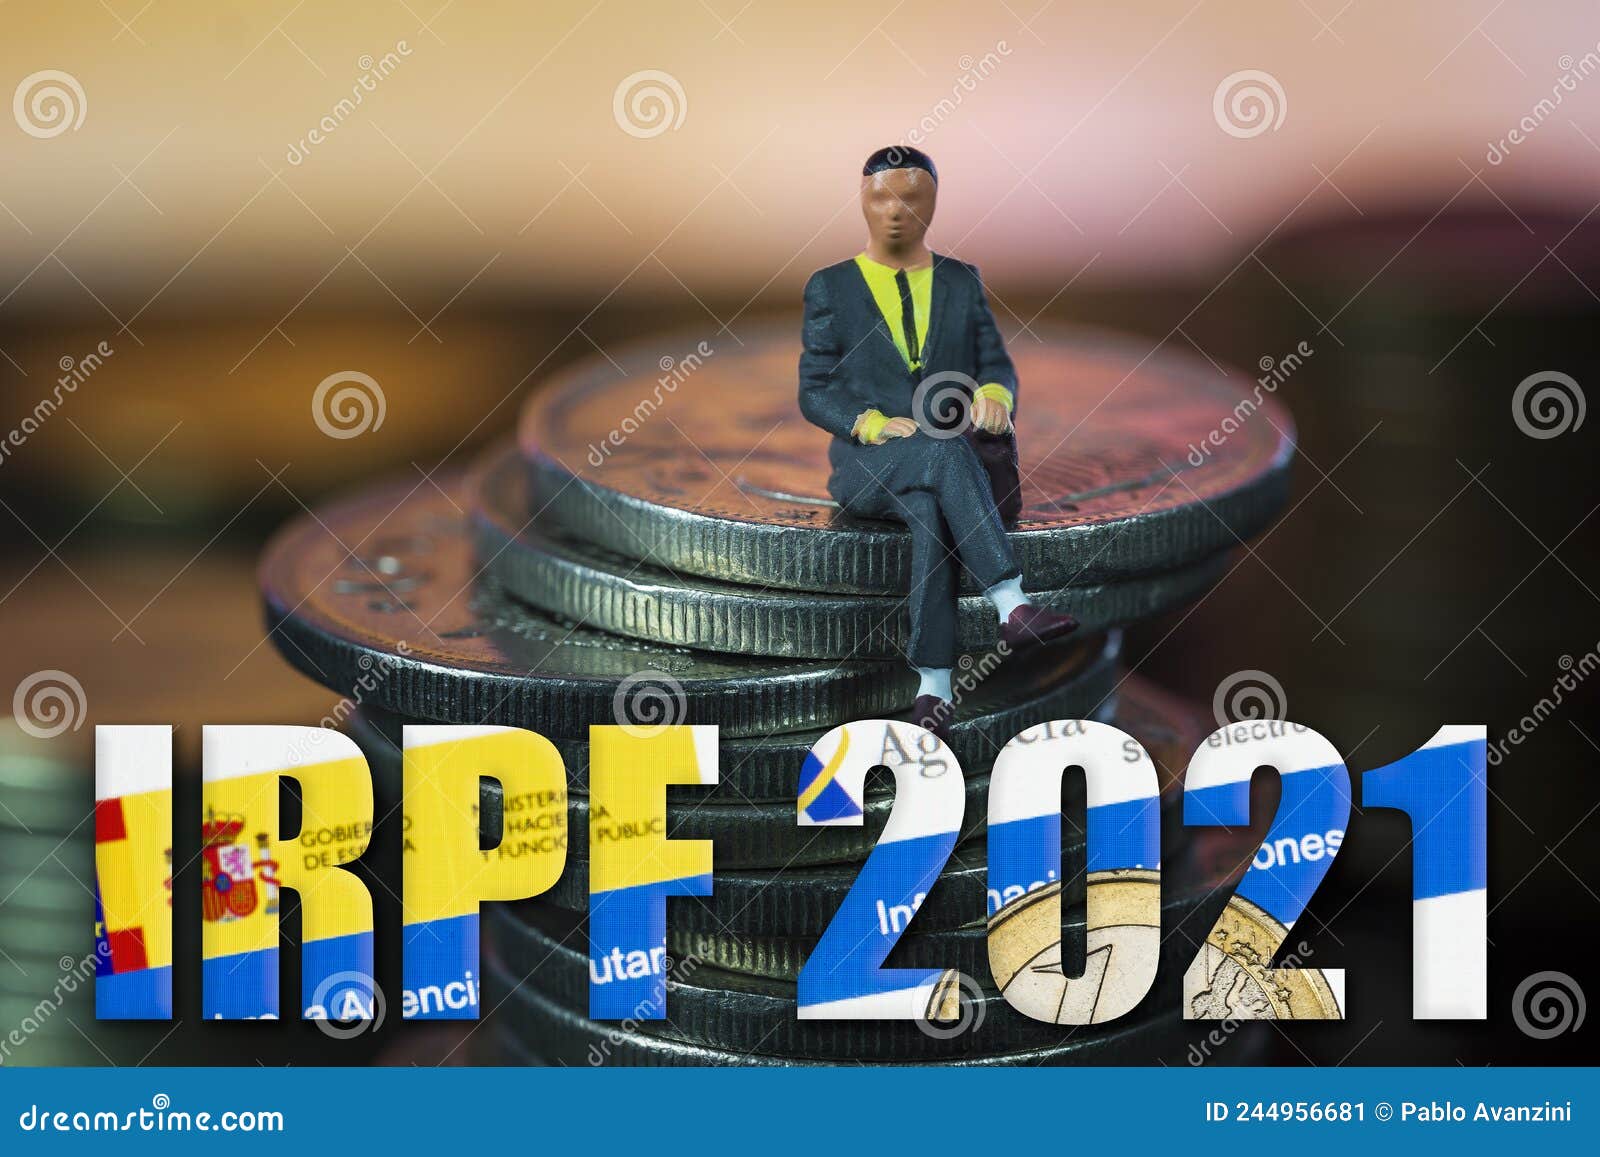 irpf 2021 income tax campaign spain